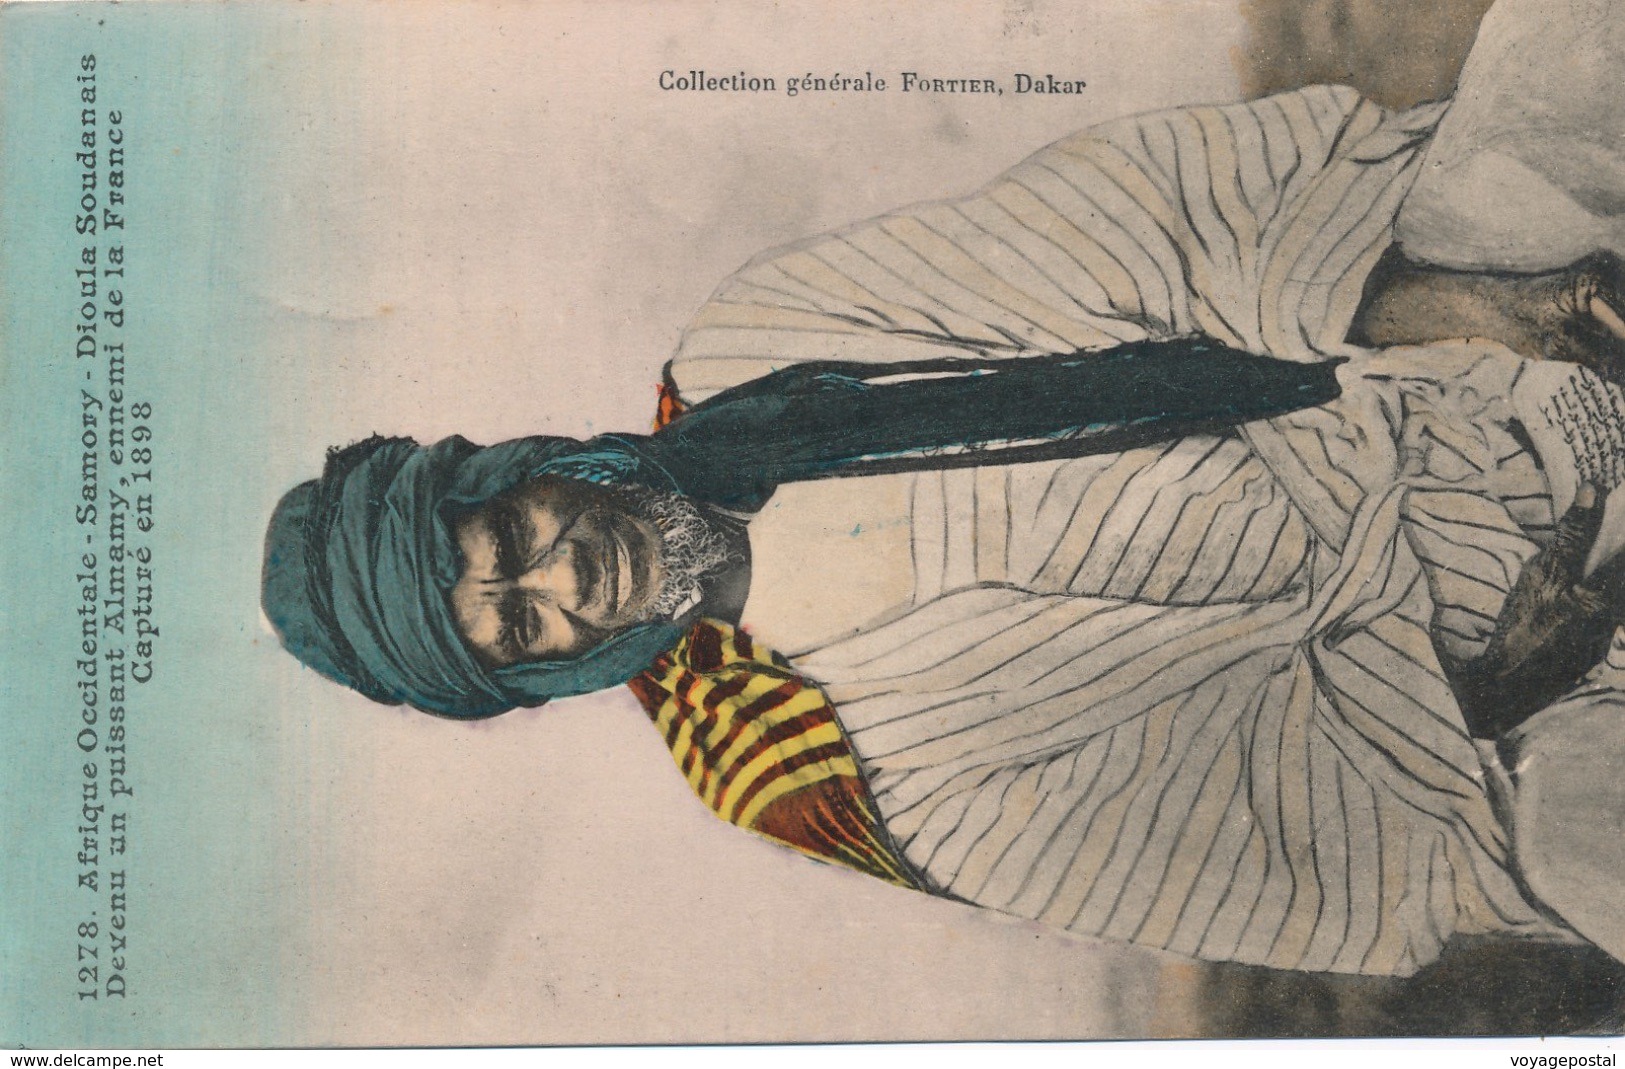 Carte General Faidherbe Gorée Senegal - Lettres & Documents